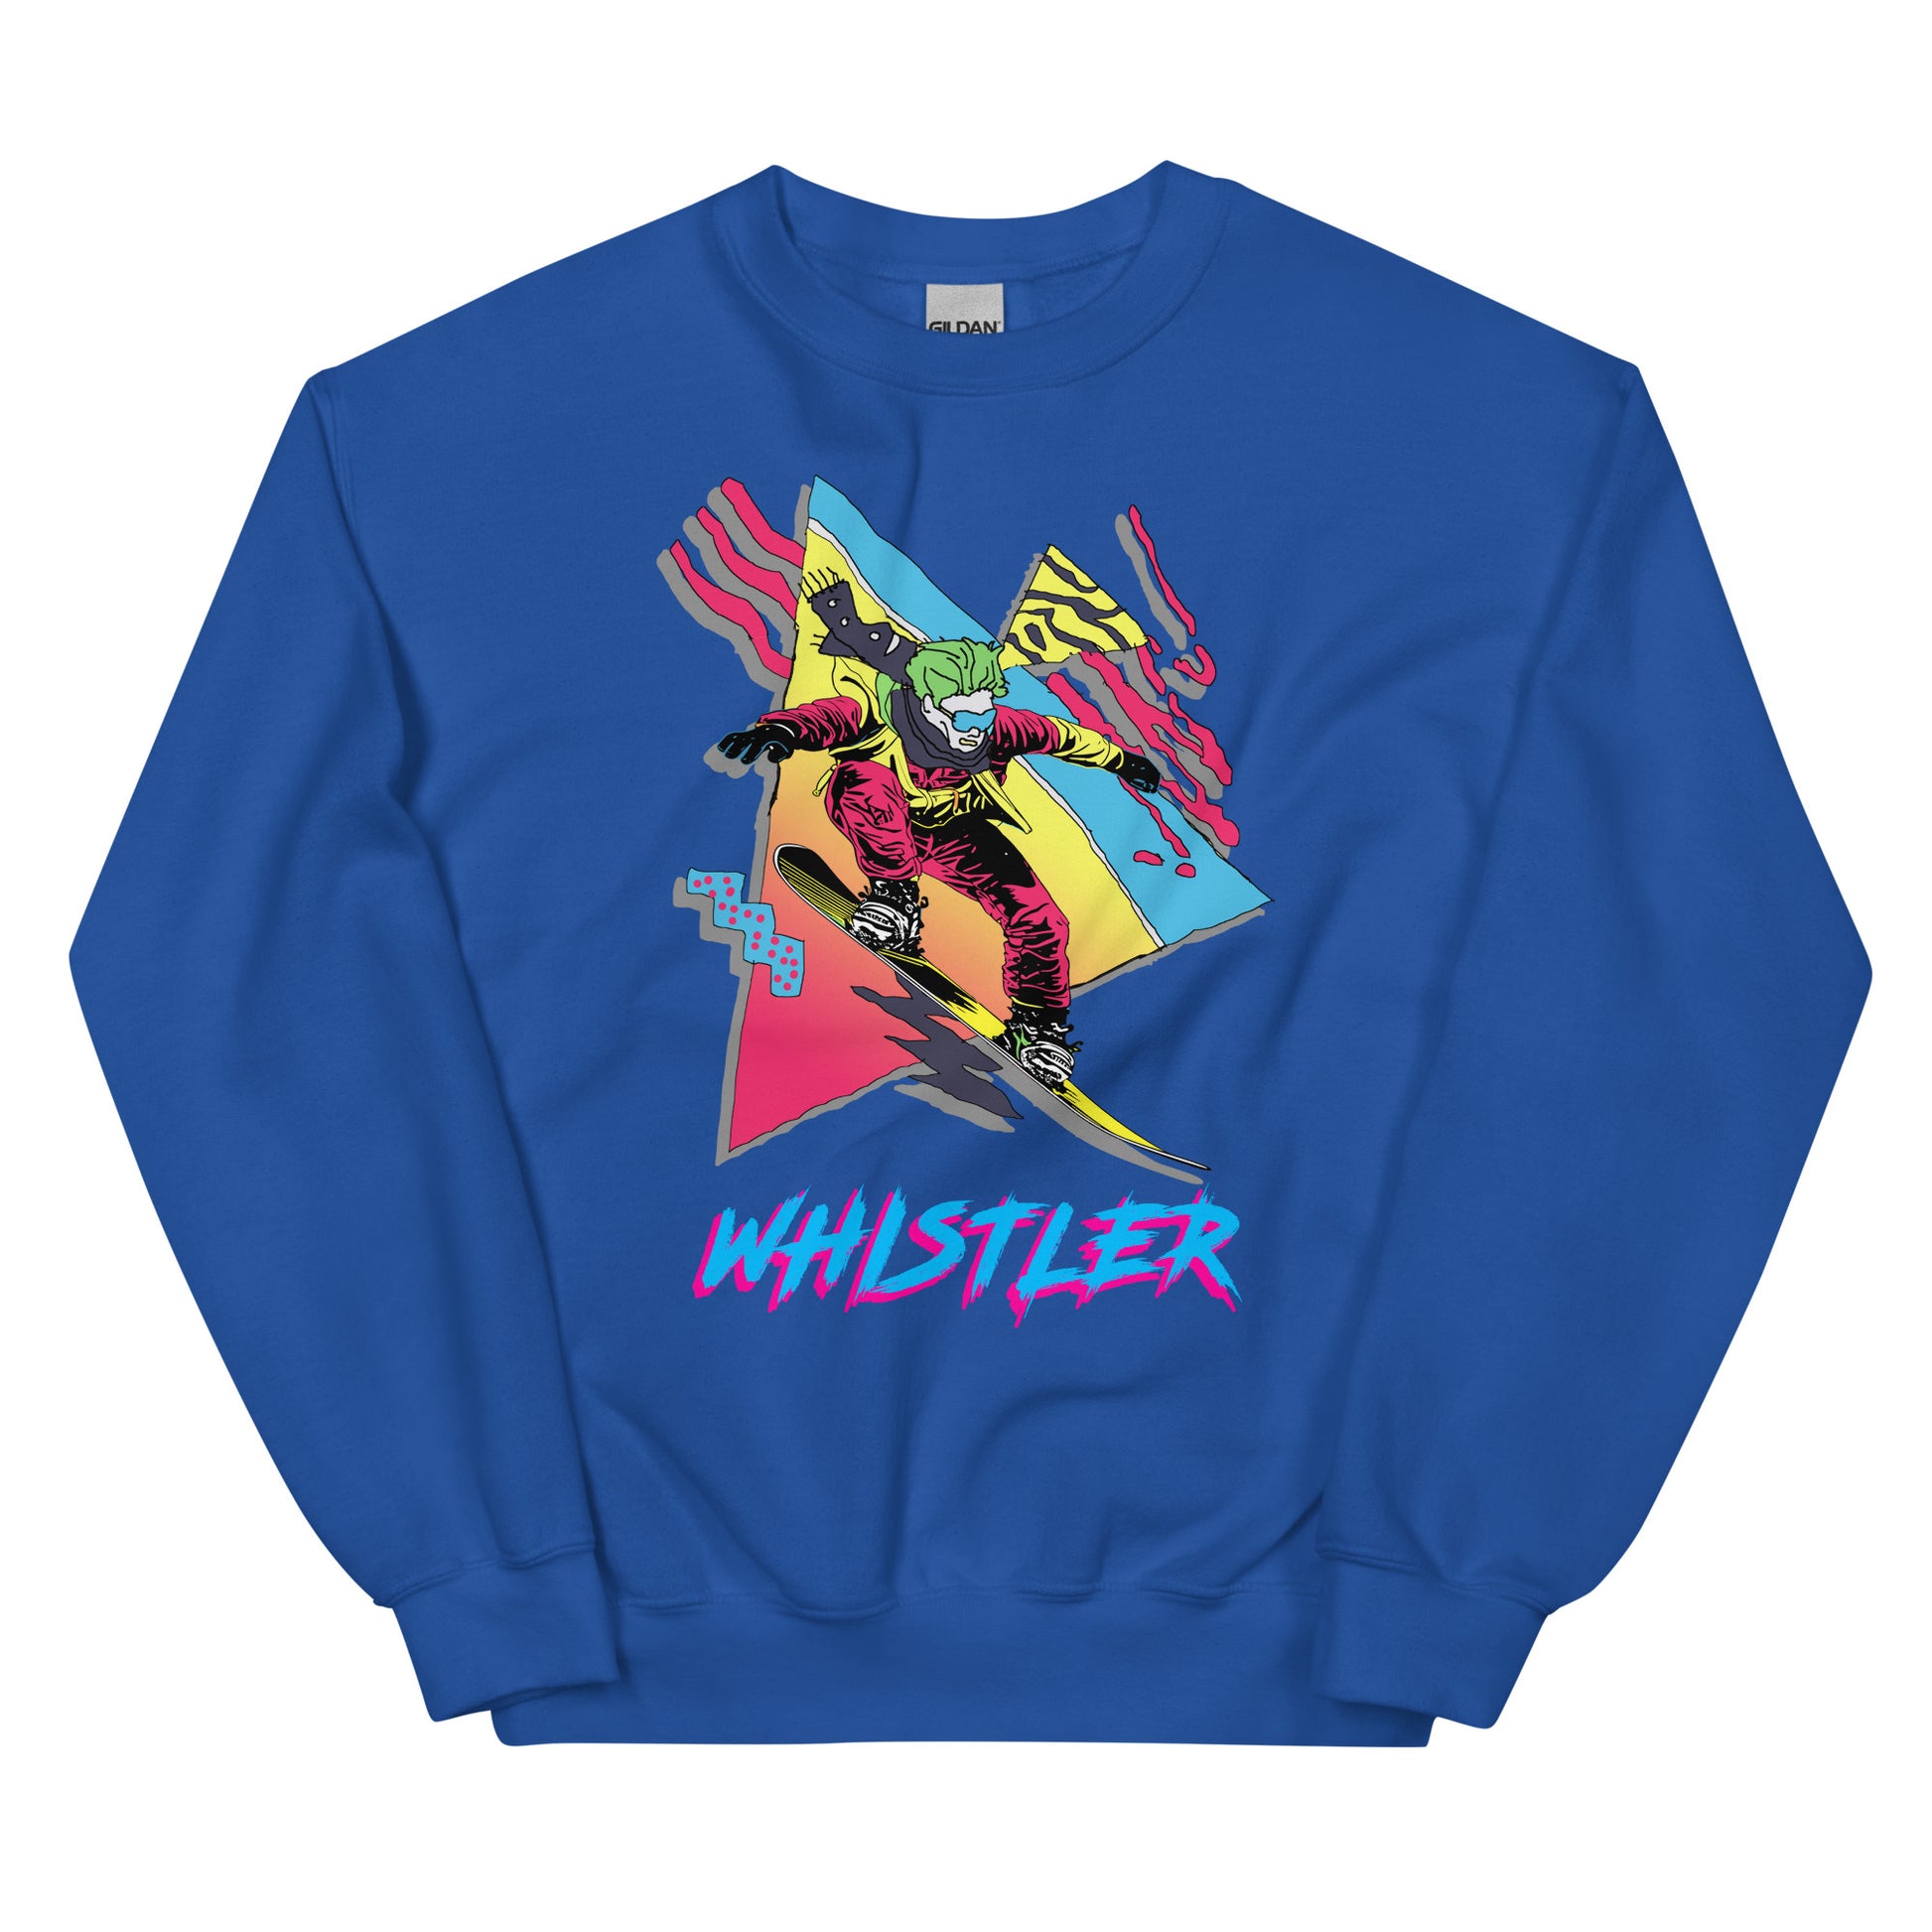 Whistler Retro Snowboarder printed crewneck by Whistler Shirts